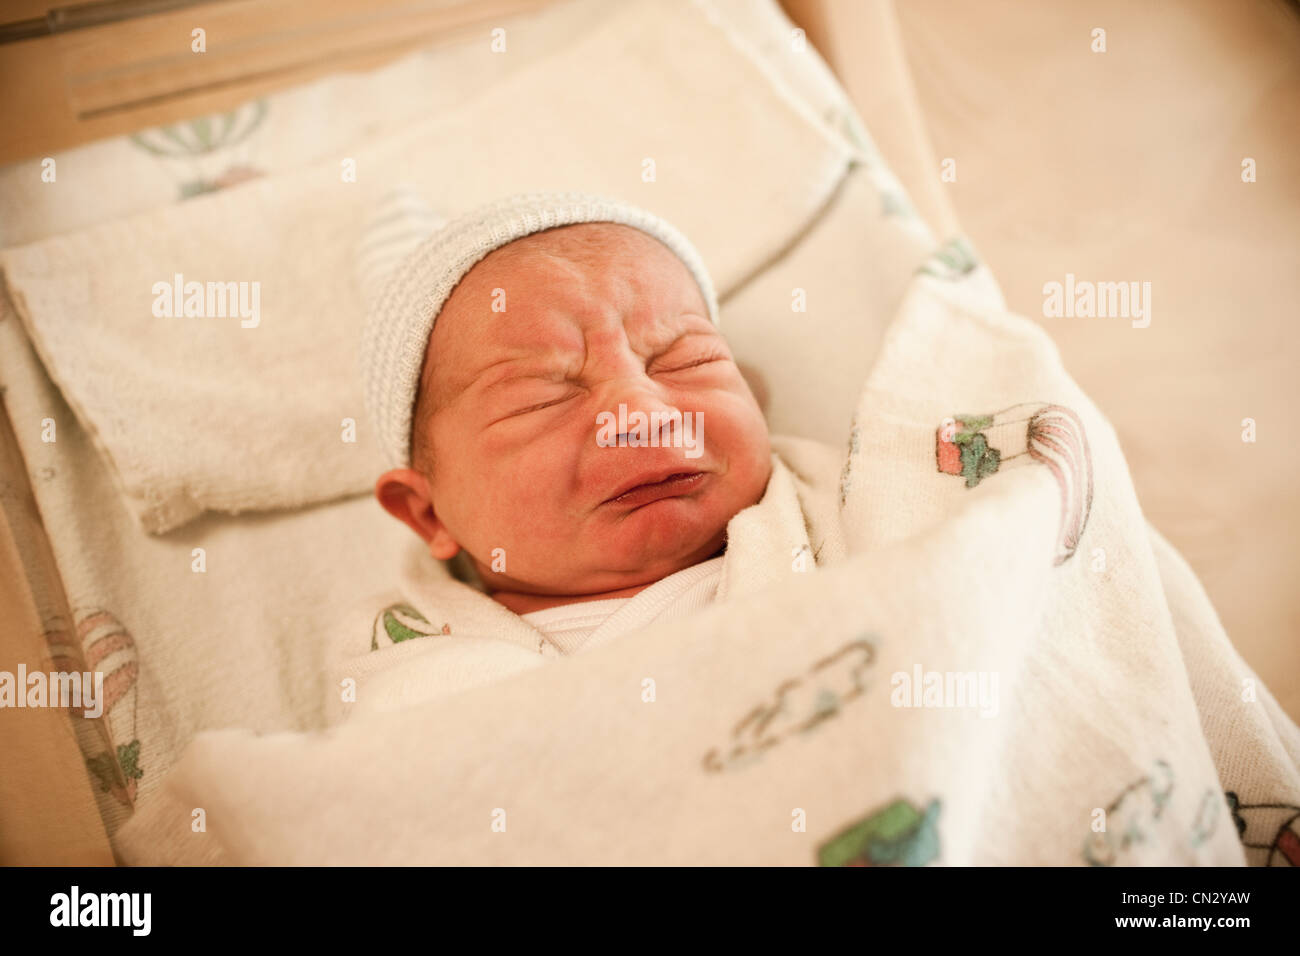 Newborn baby boy in hospital Stock Photo